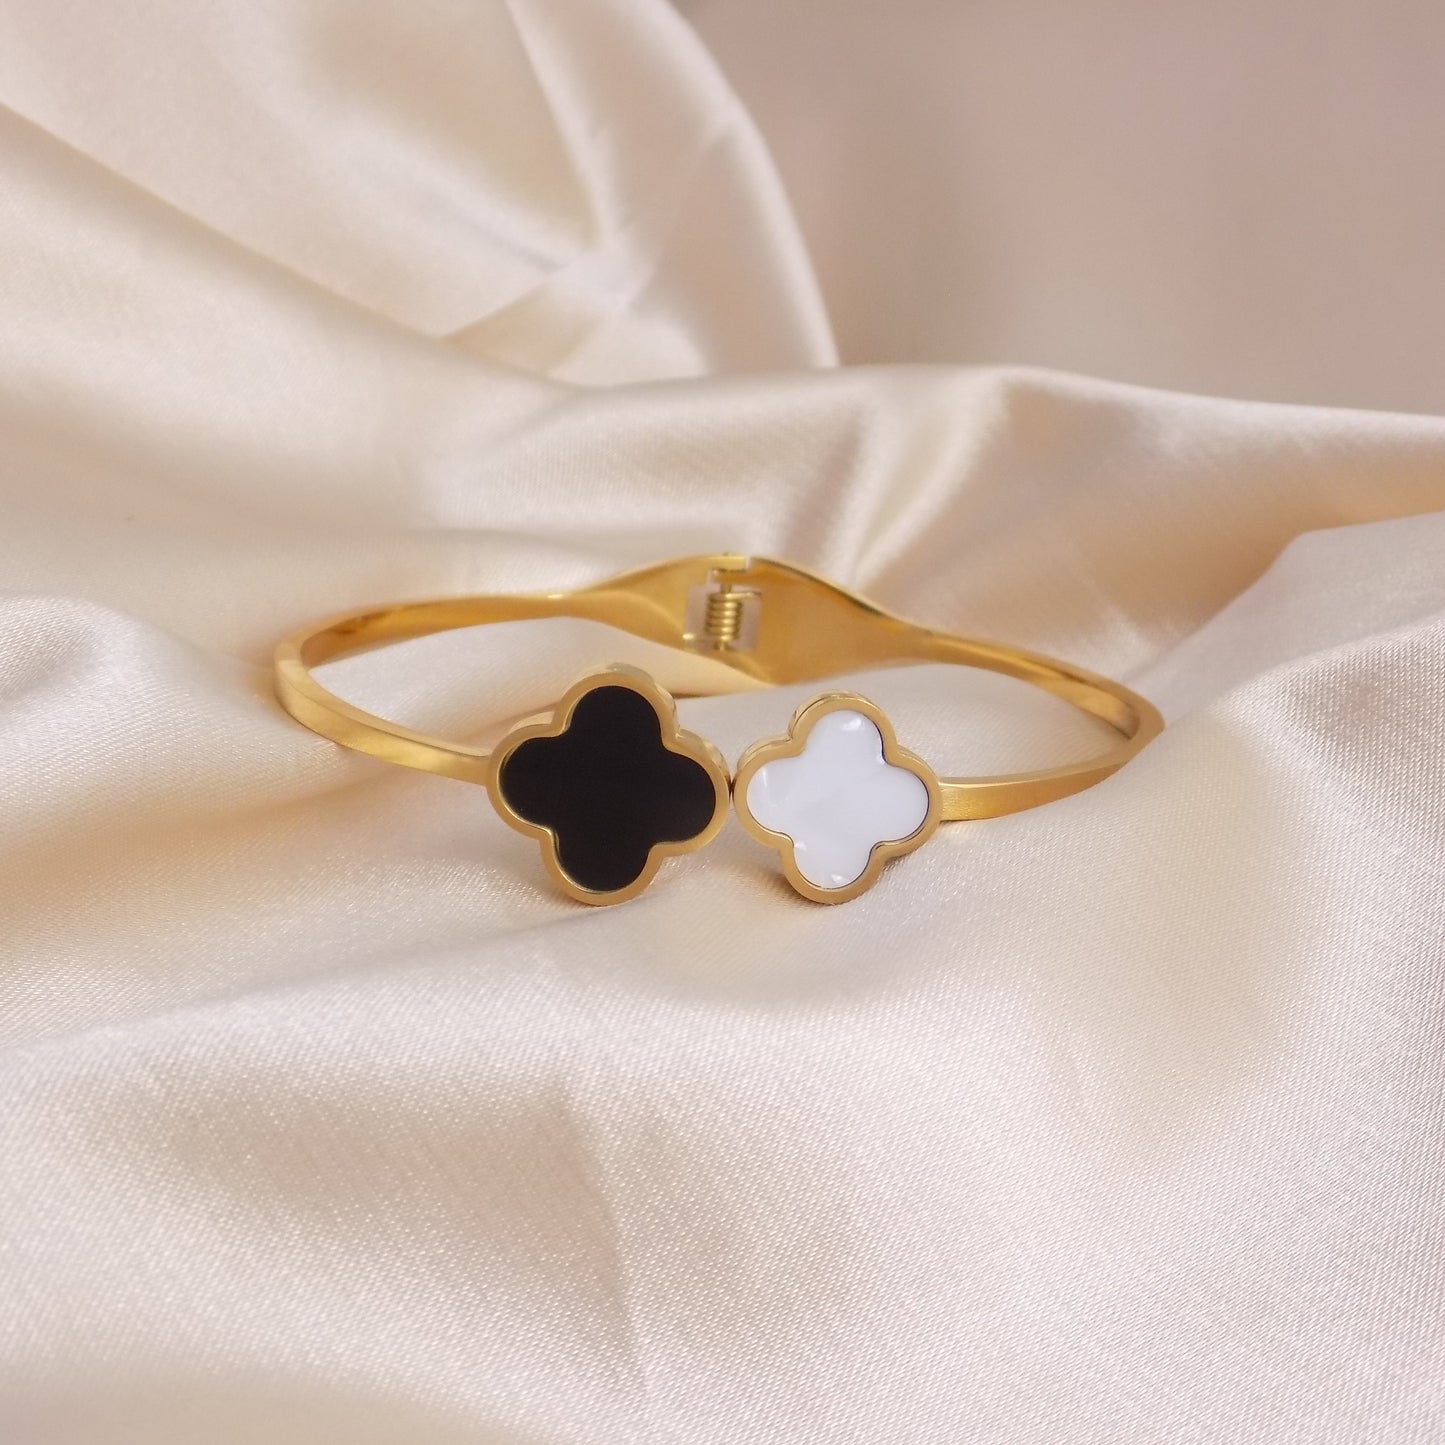 Black And White Clover Bangle Bracelet 18K Gold Stainless Steel - Modern Trendy Jewelry